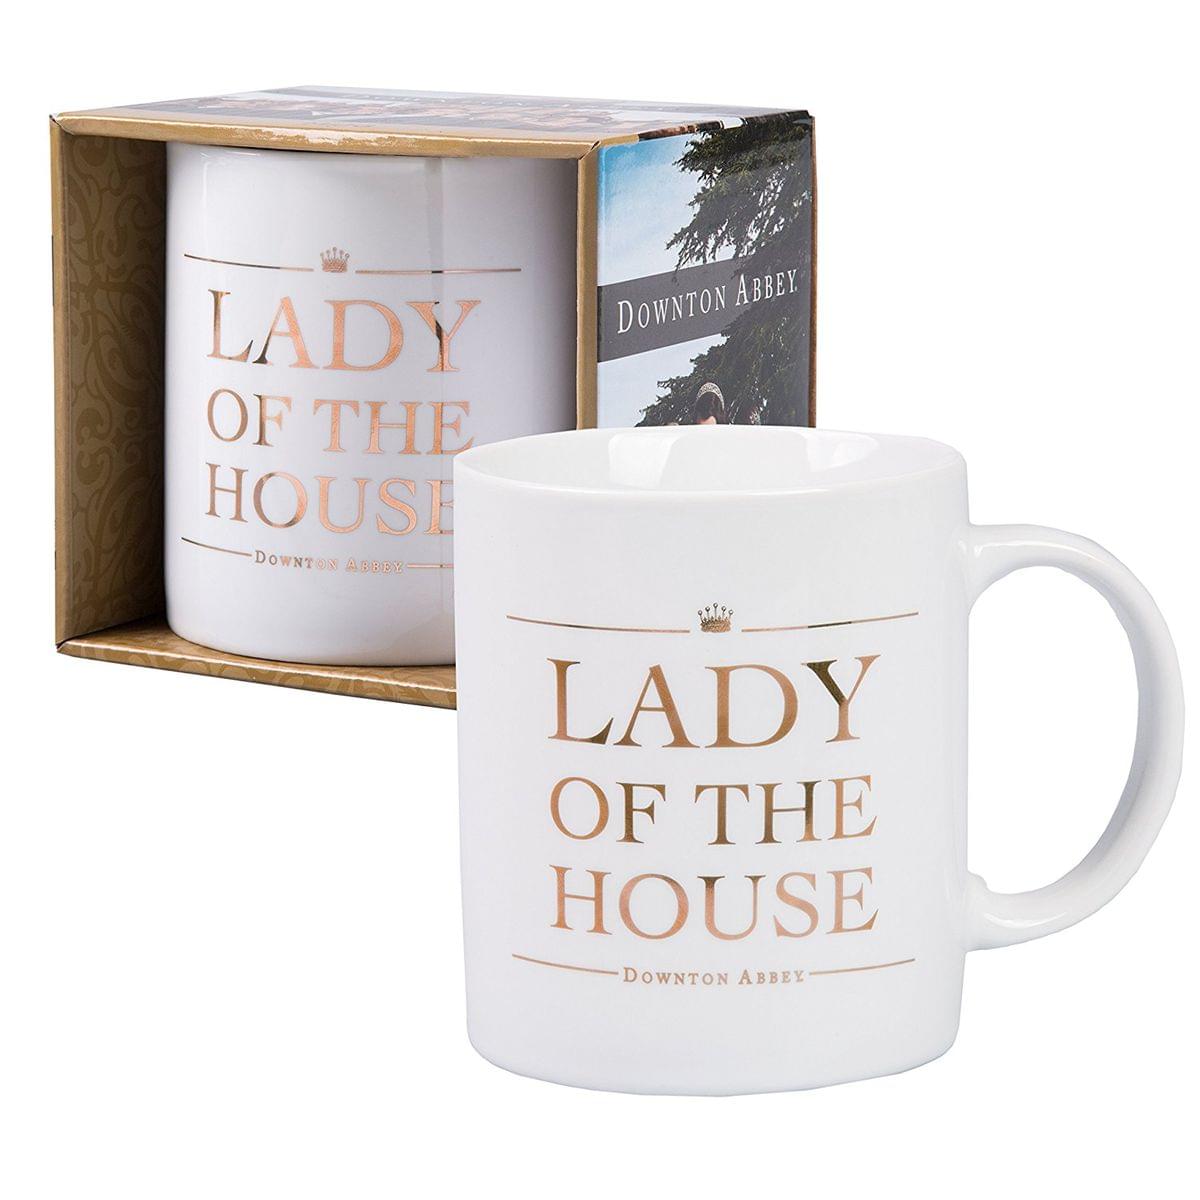 Downton Abbey "Lady of the House" 20oz Mug